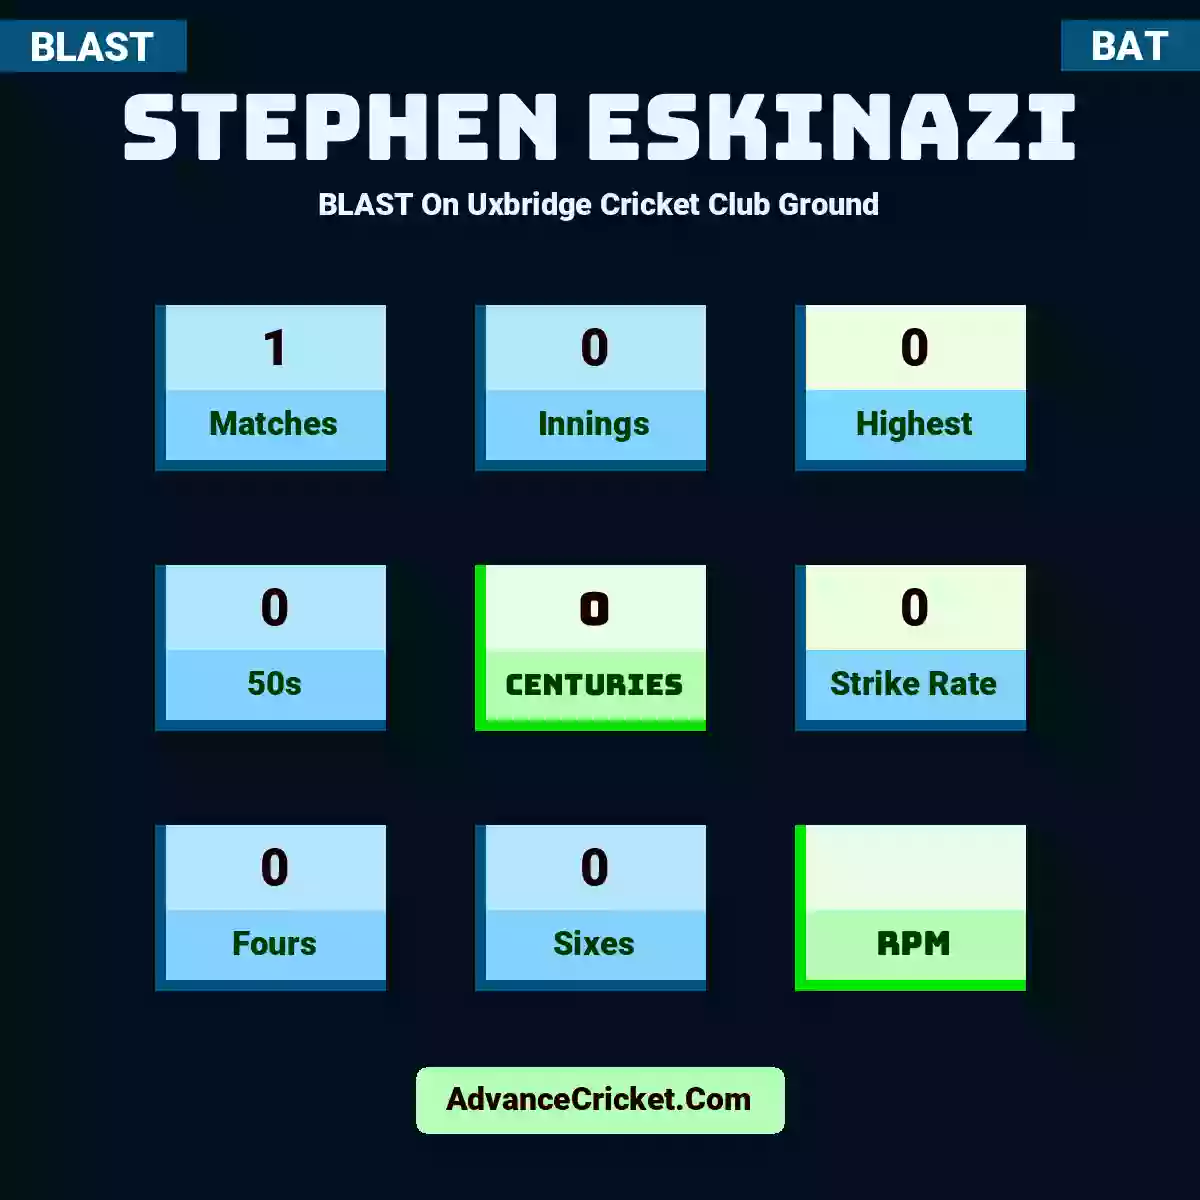 Stephen Eskinazi BLAST  On Uxbridge Cricket Club Ground, Stephen Eskinazi played 1 matches, scored 0 runs as highest, 0 half-centuries, and 0 centuries, with a strike rate of 0. S.Eskinazi hit 0 fours and 0 sixes.